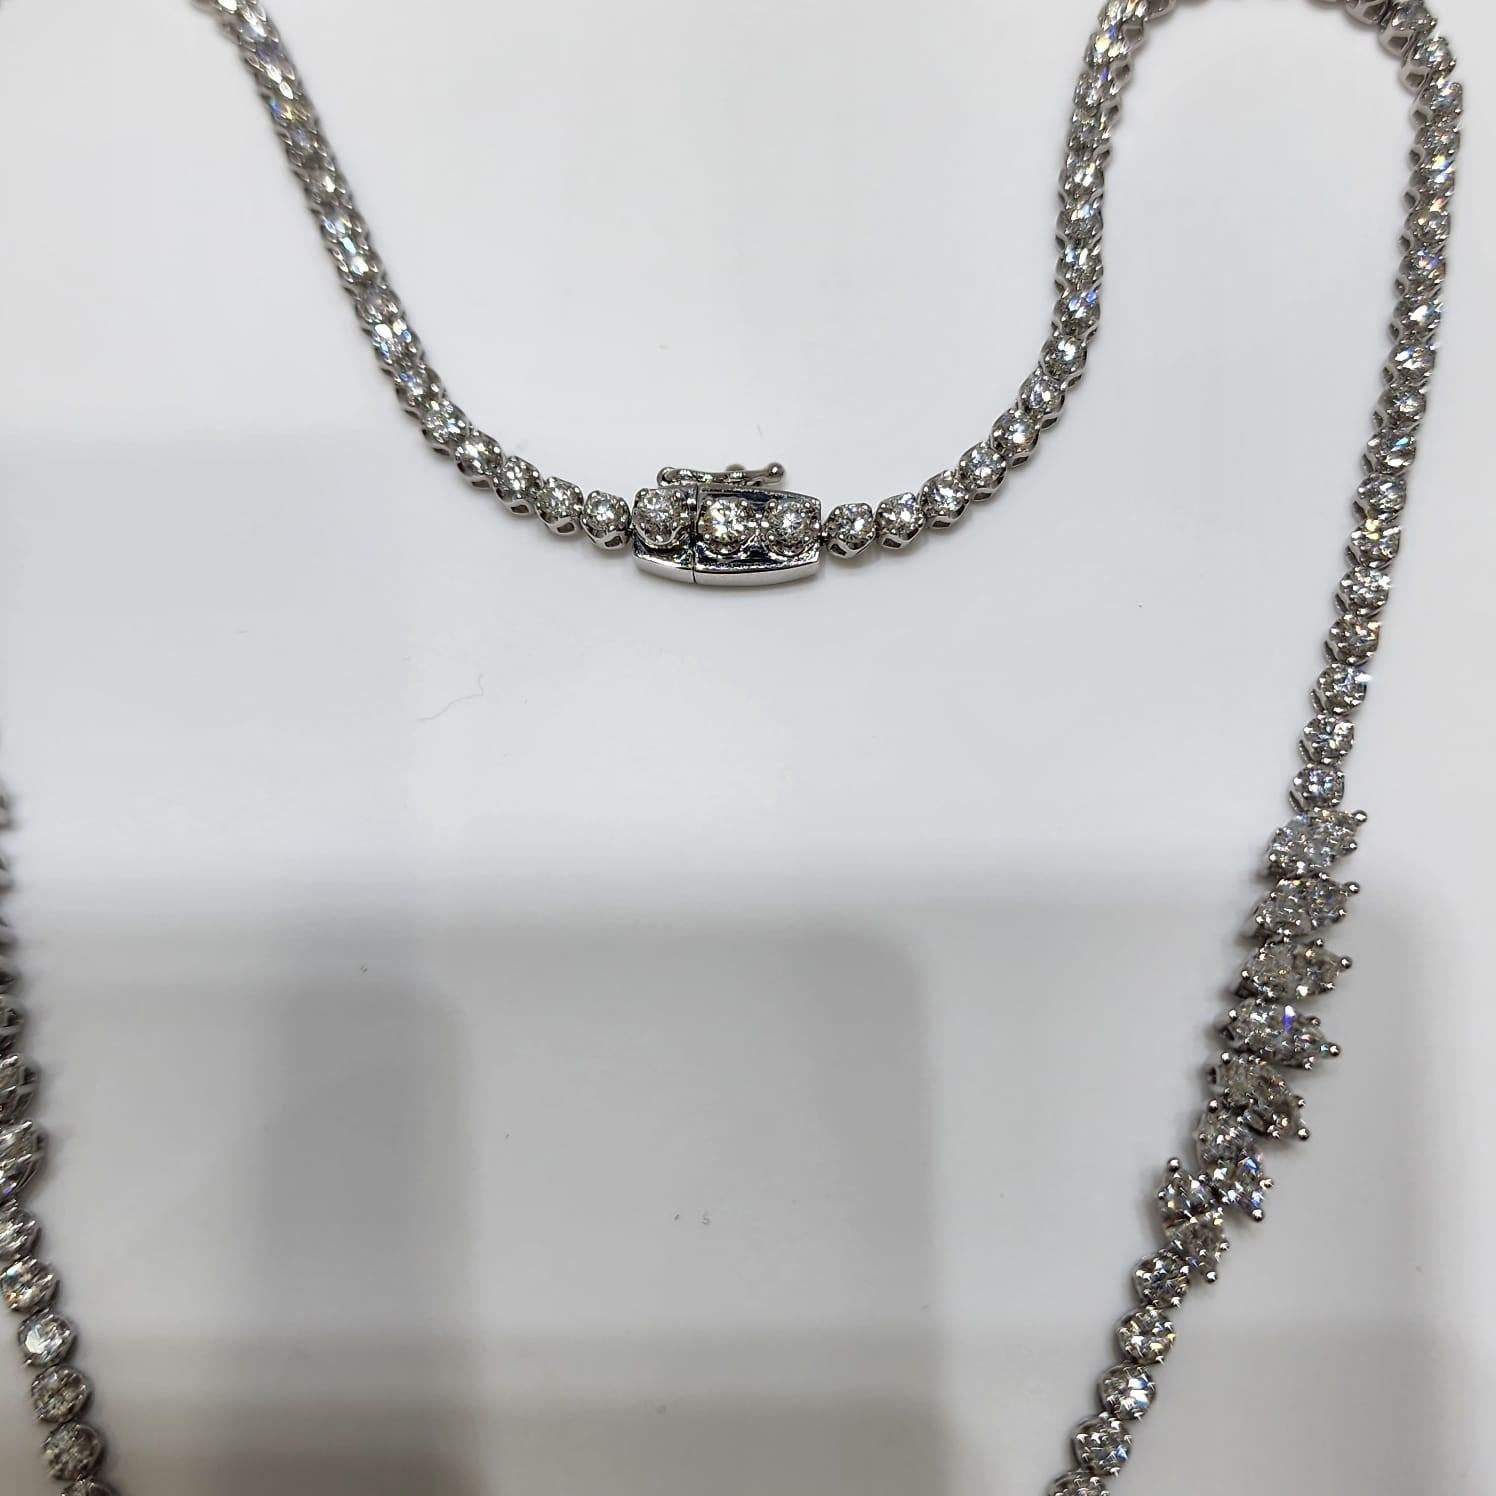 8.61 Carat Burma Ruby Diamond Necklace in 18 Karat White Gold For Sale 2